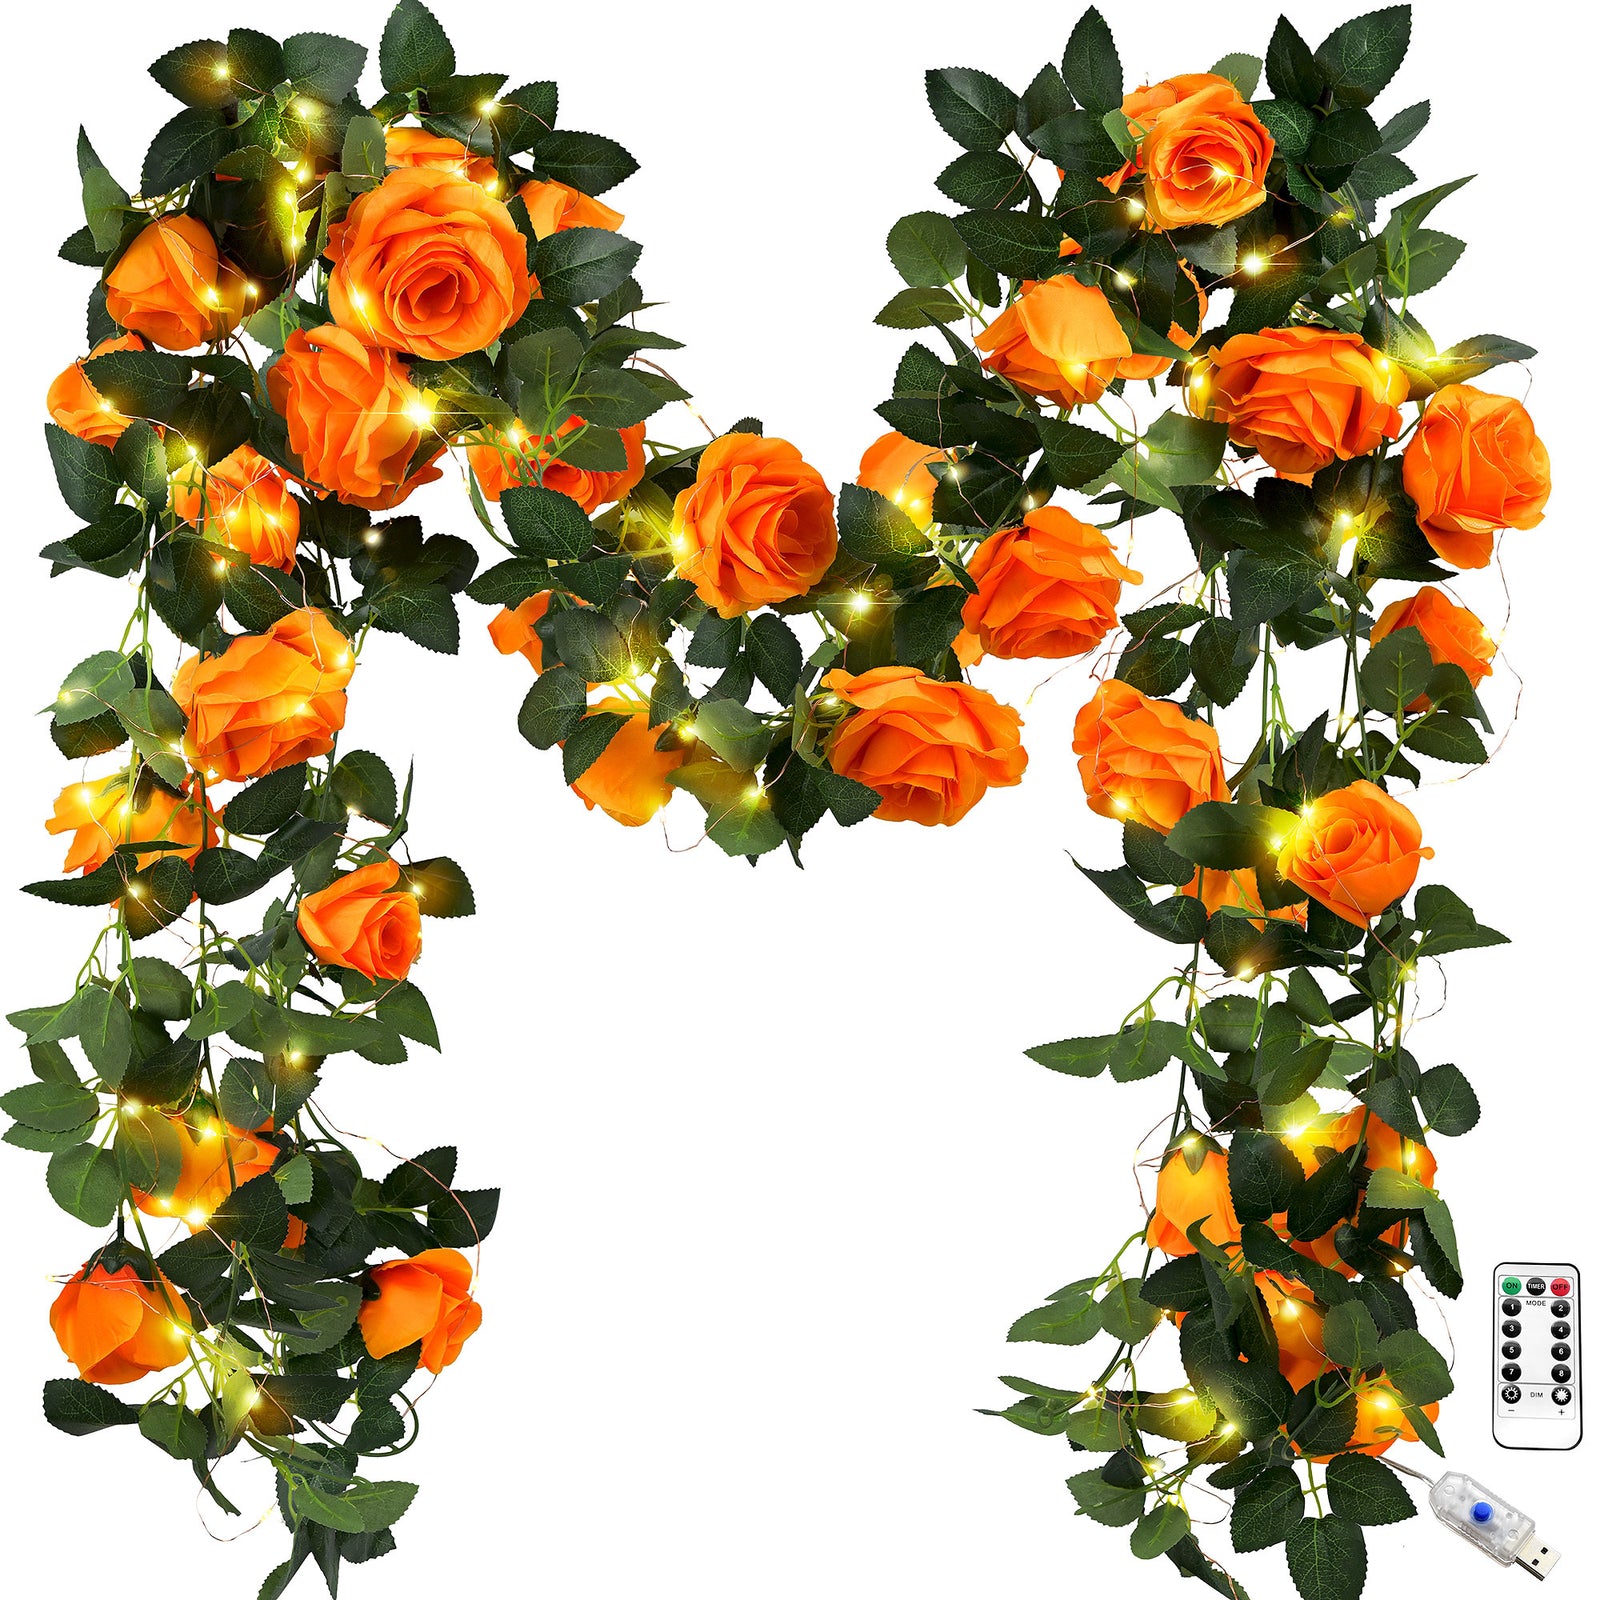 29 Ft 4 Pack Mandarin Orange Rose Silk Flower Garland Artificial Flowers Decoration Hanging Floral with 66 feet String Lights